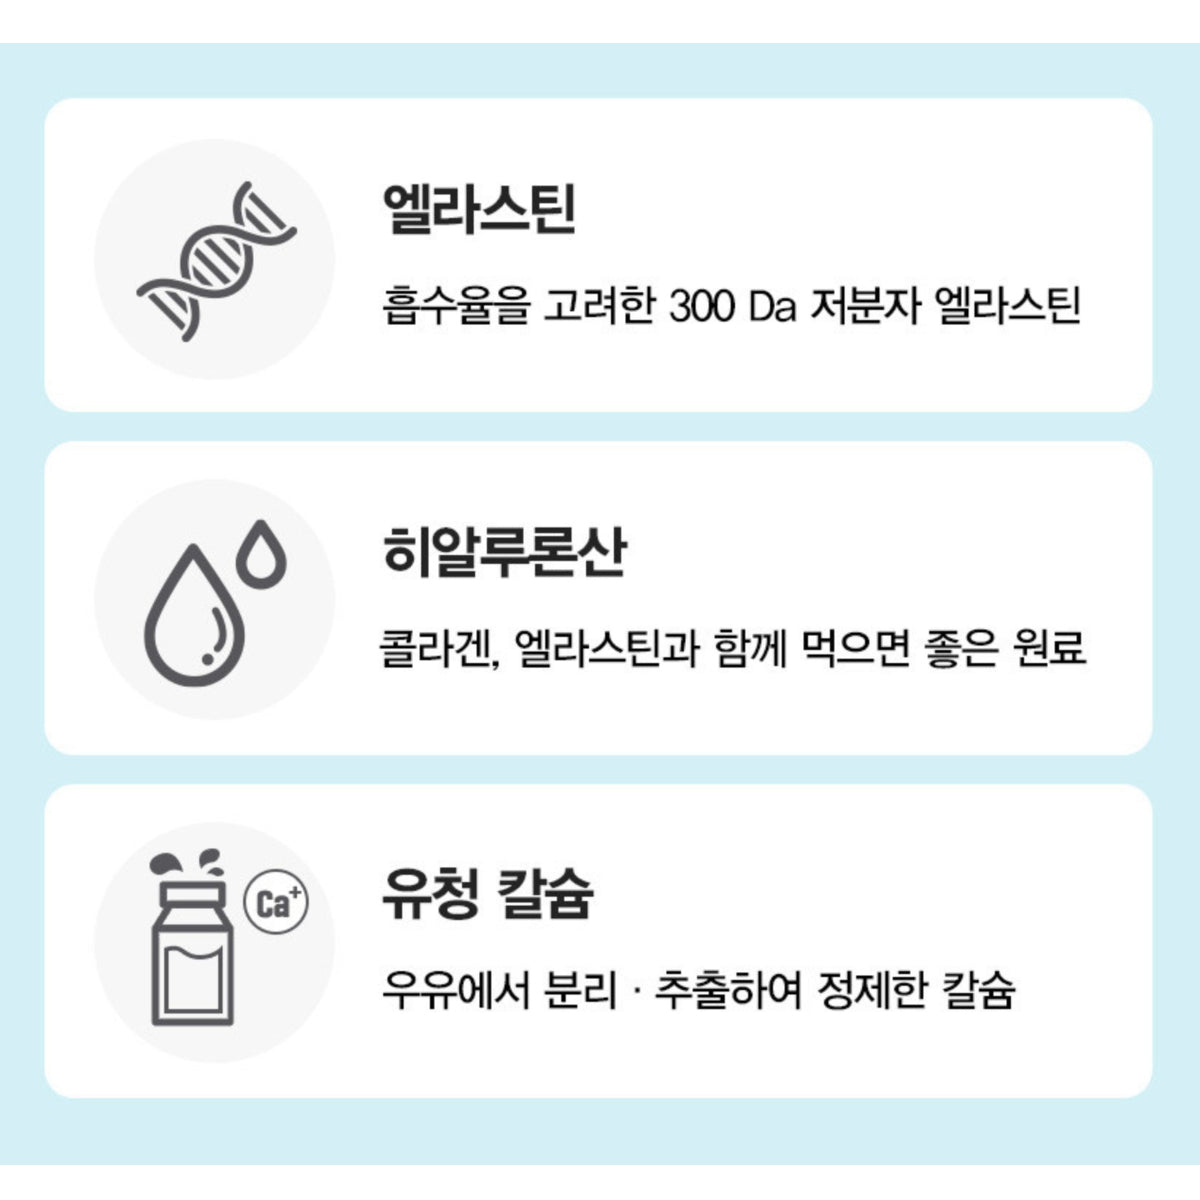 GNM Milk Ceramide Low Molecular Collagen Vitamin C Elastin Hyaluronic Acid 3 boxes(84 packets) / from Seoul, Korea